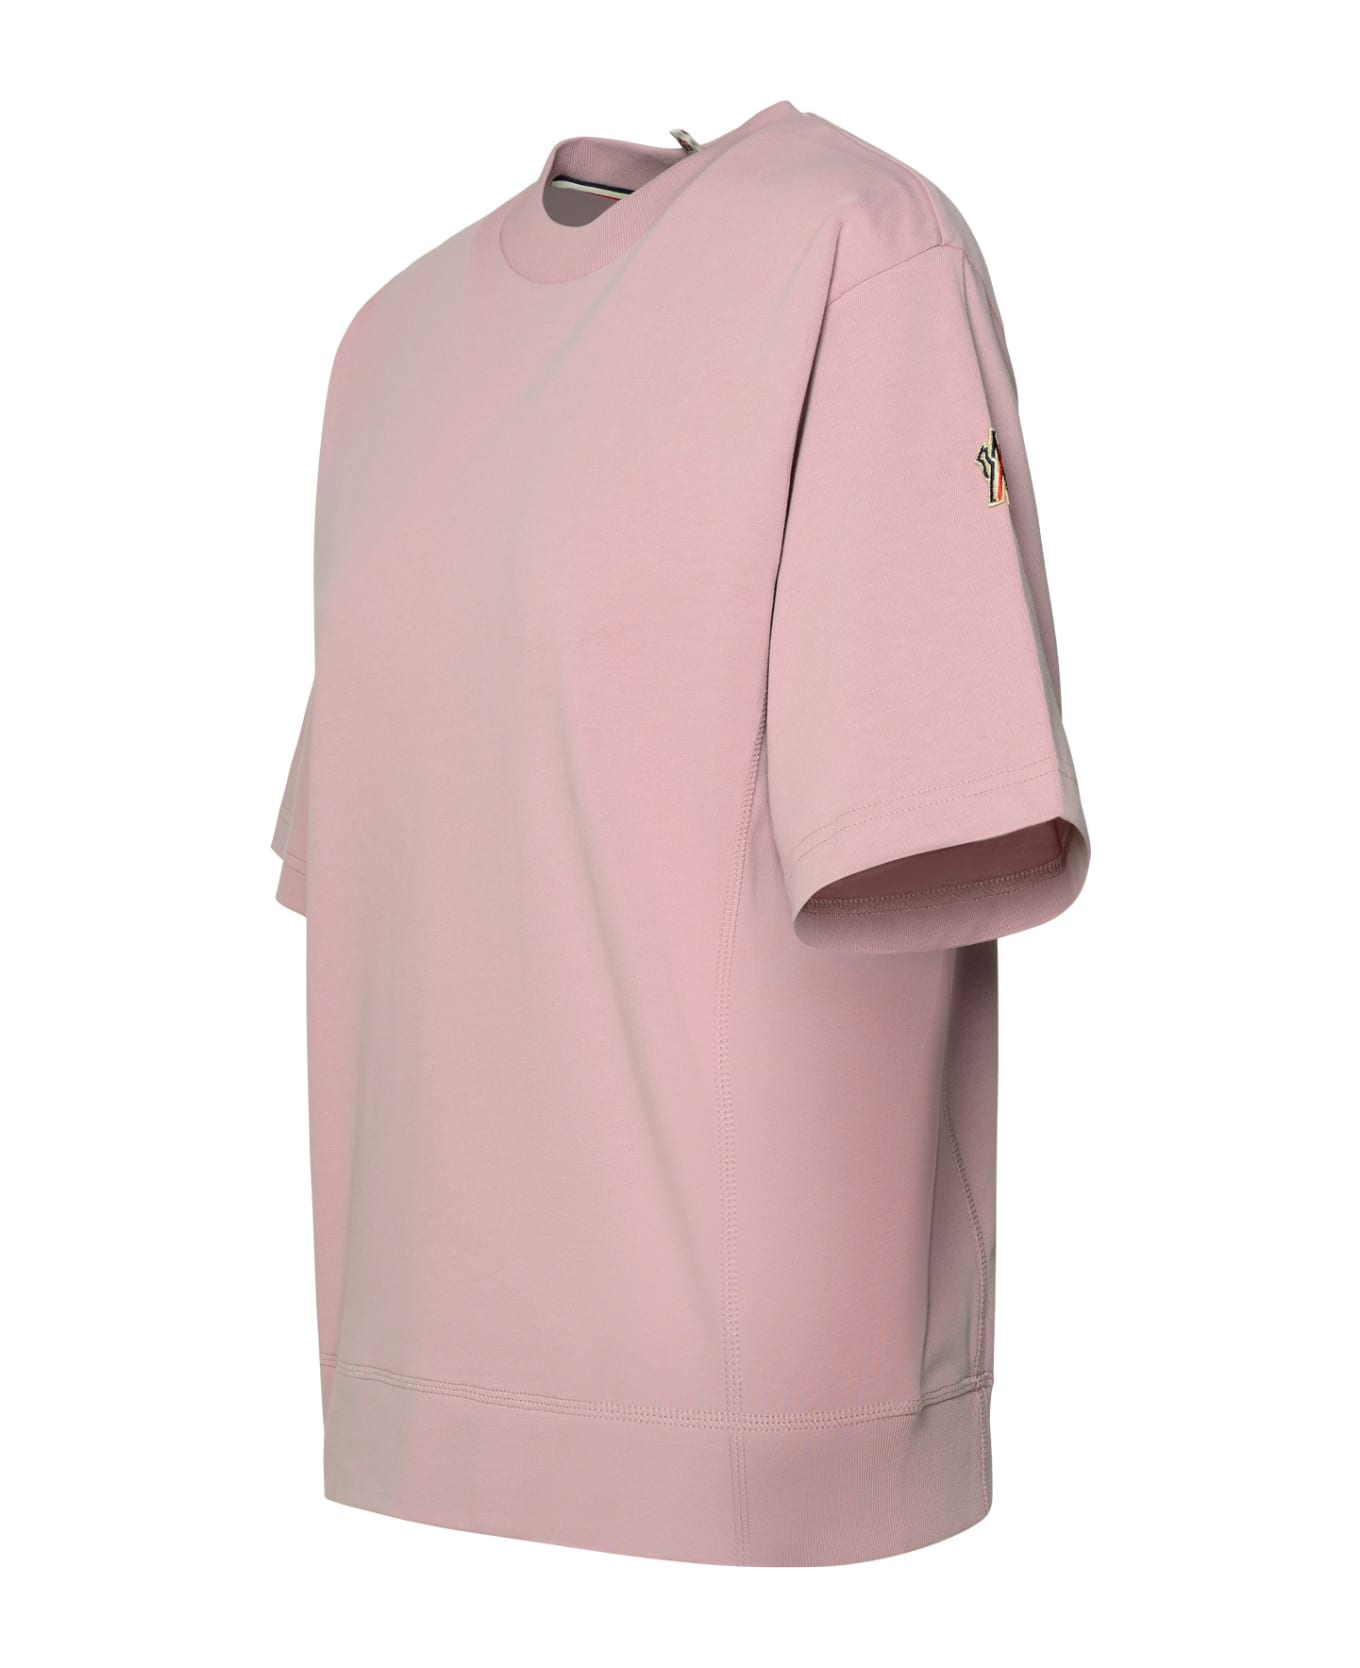 Moncler Grenoble Pink Cotton T-shirt - PINK